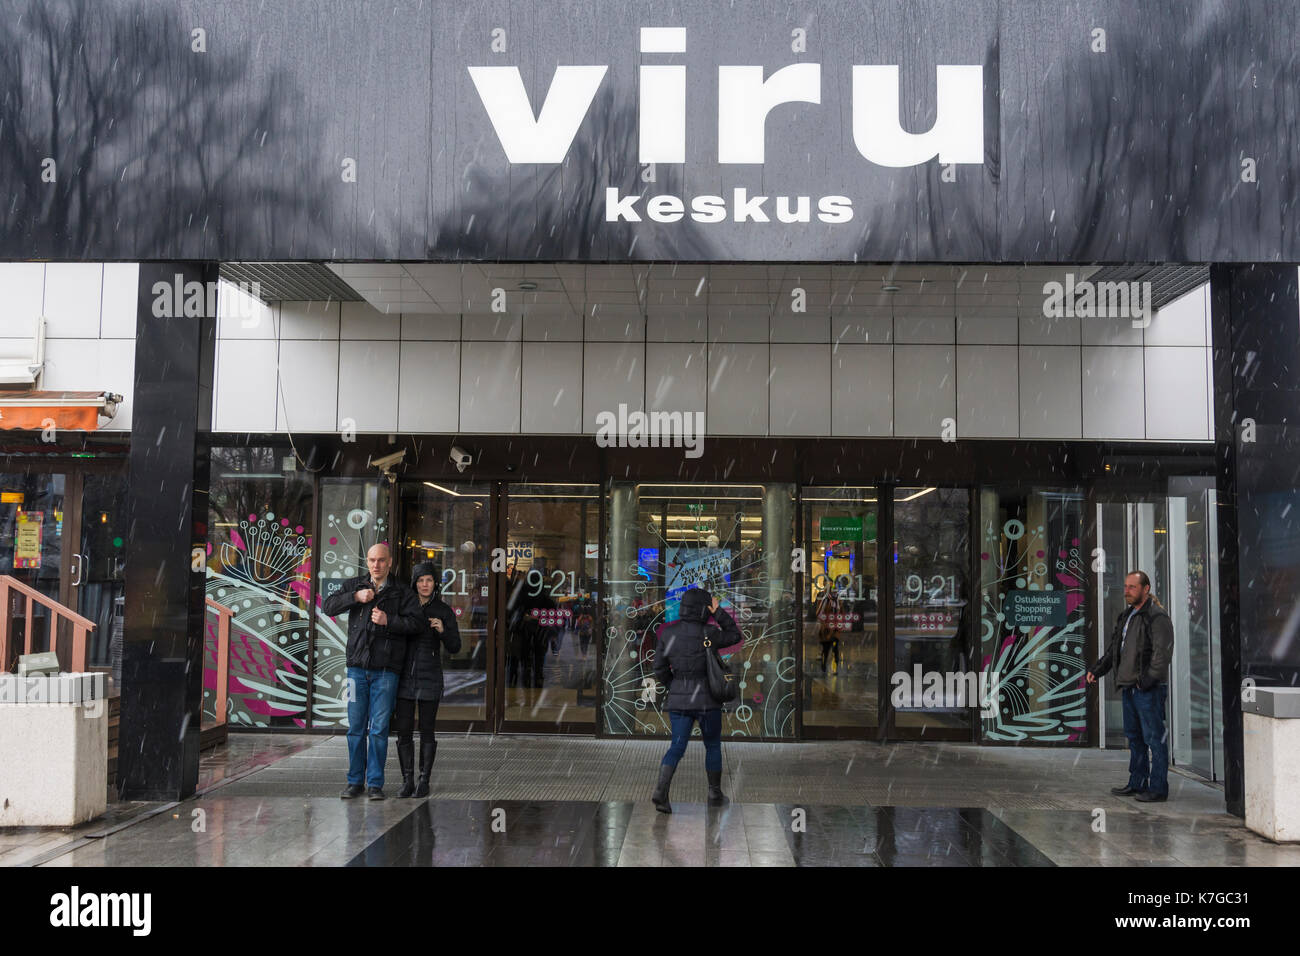 Viru keskus shopping centre main entrance In Tallinn Estonia Stock Photo